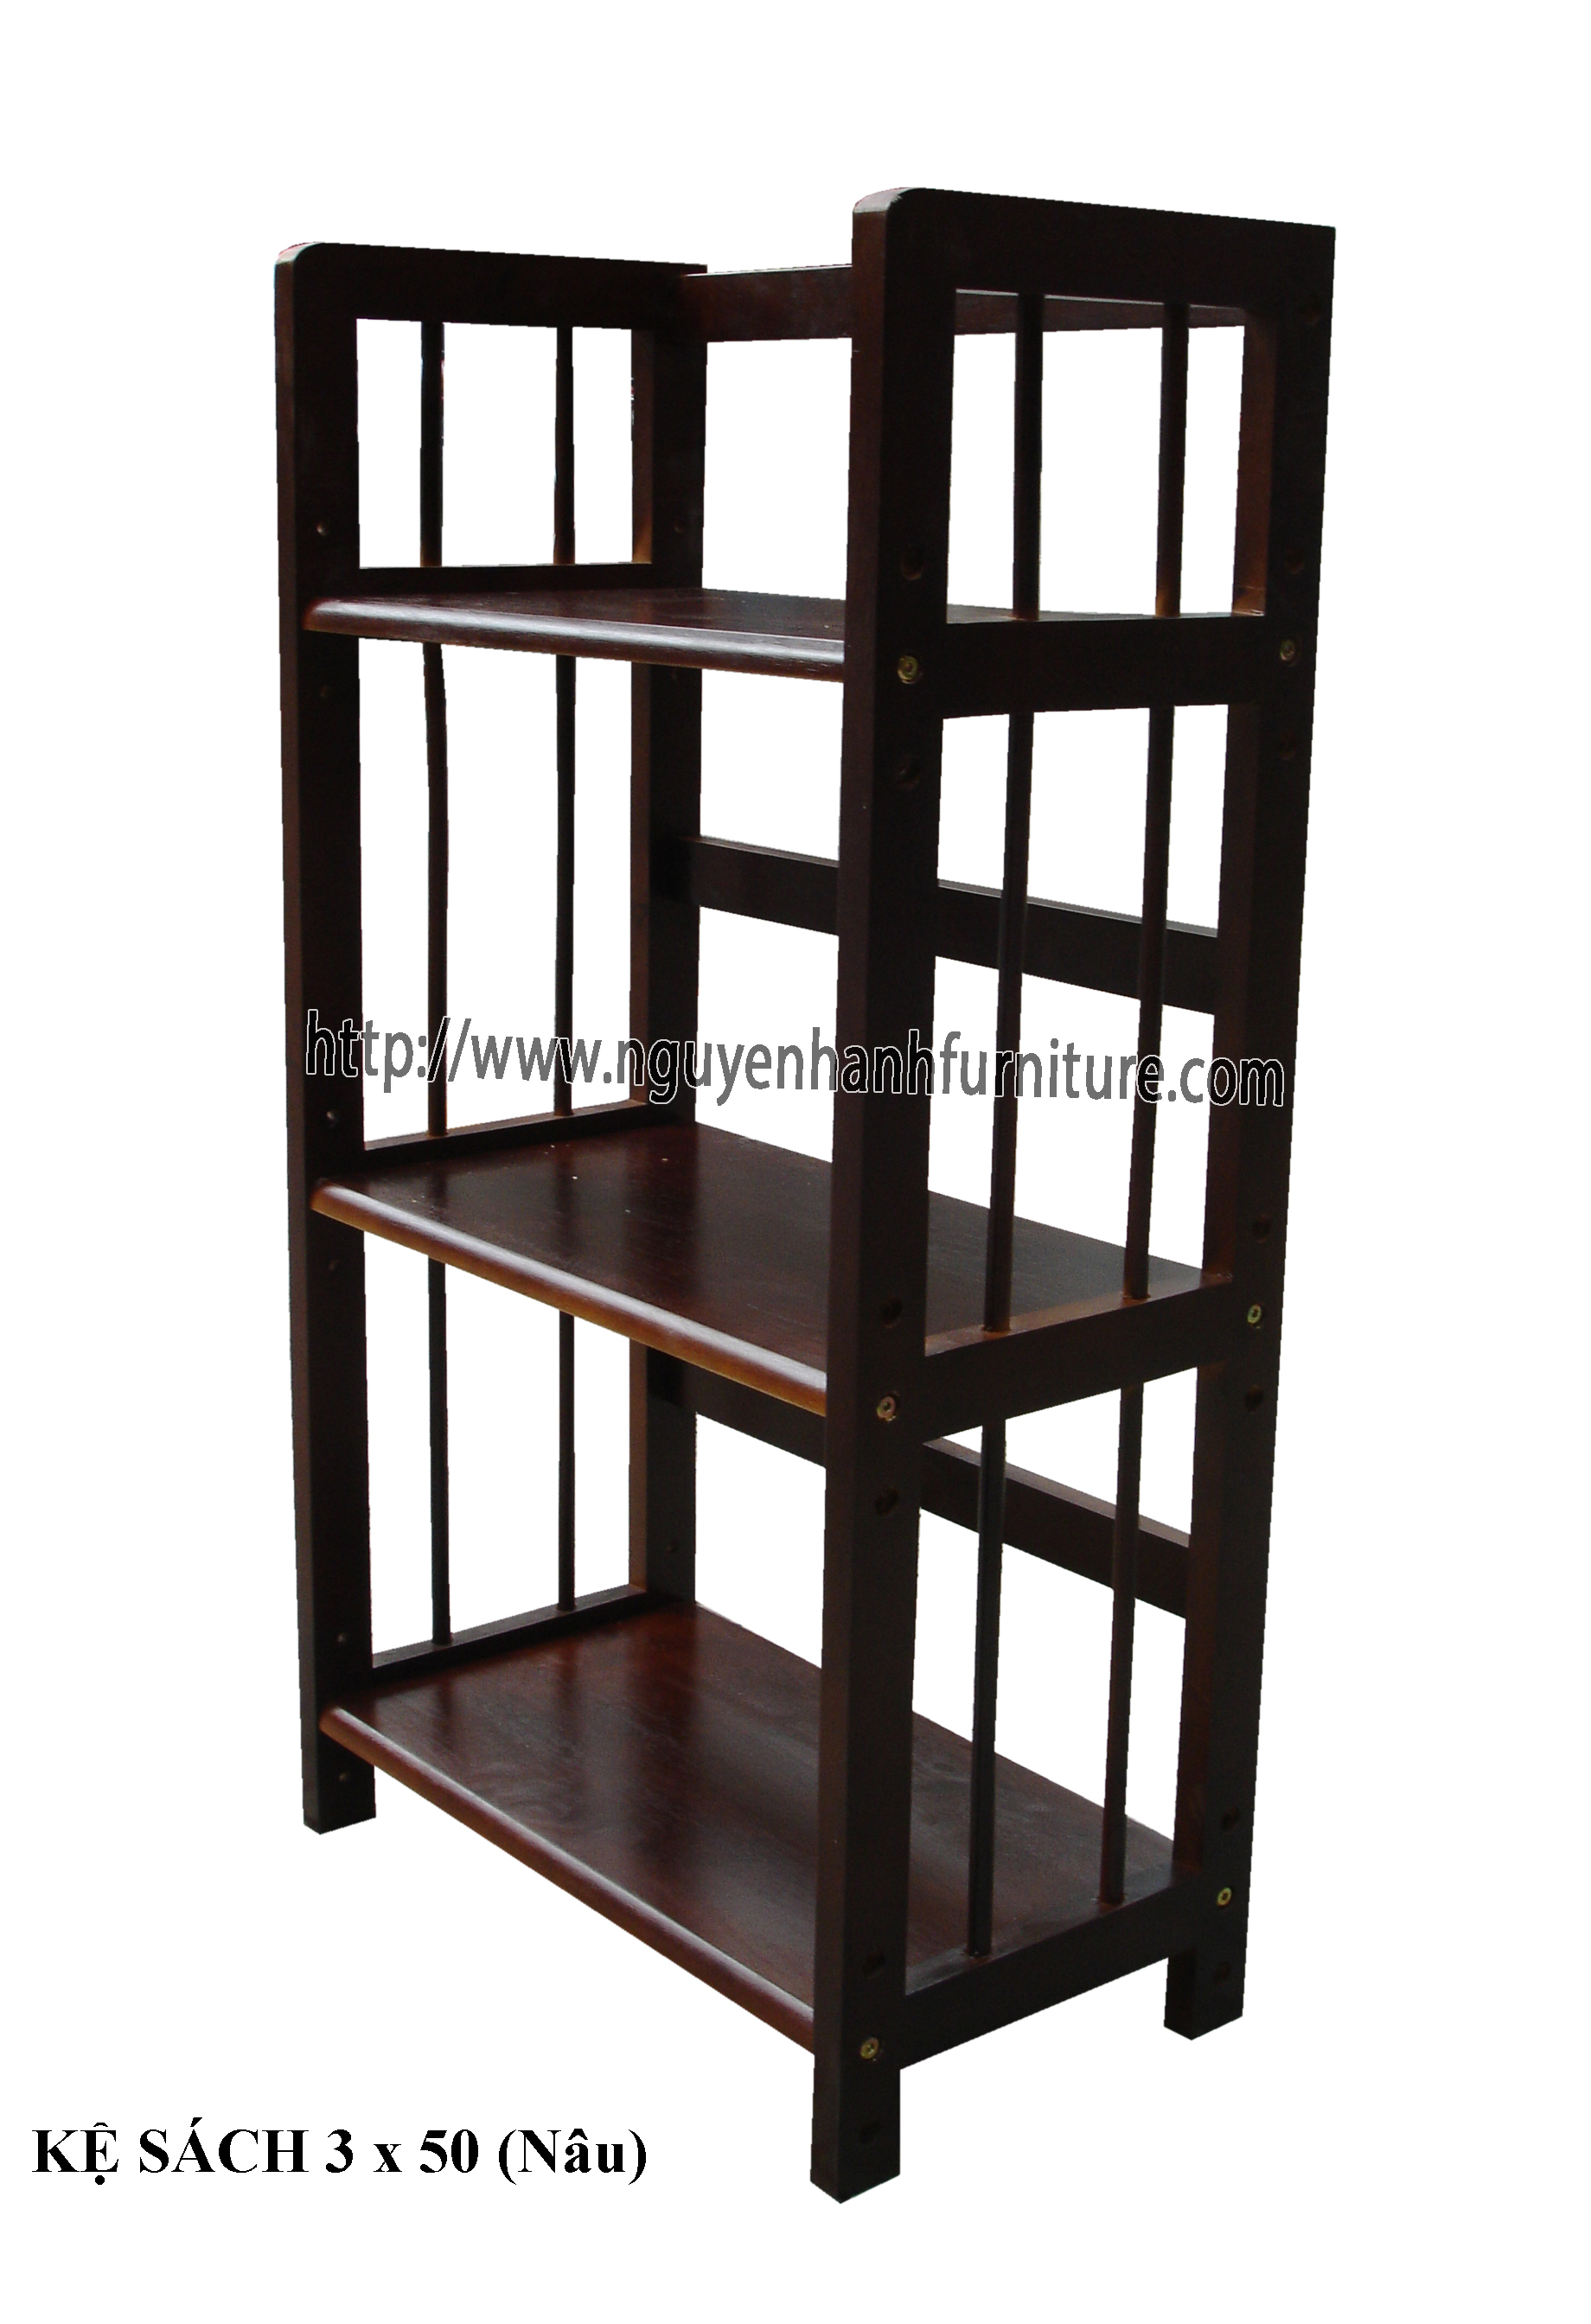 Name product: Triple storey Adjustable Bookshelf 50 (Brown) - Dimensions: 50 x 28 x 90 (H) - Description: Wood natural rubber